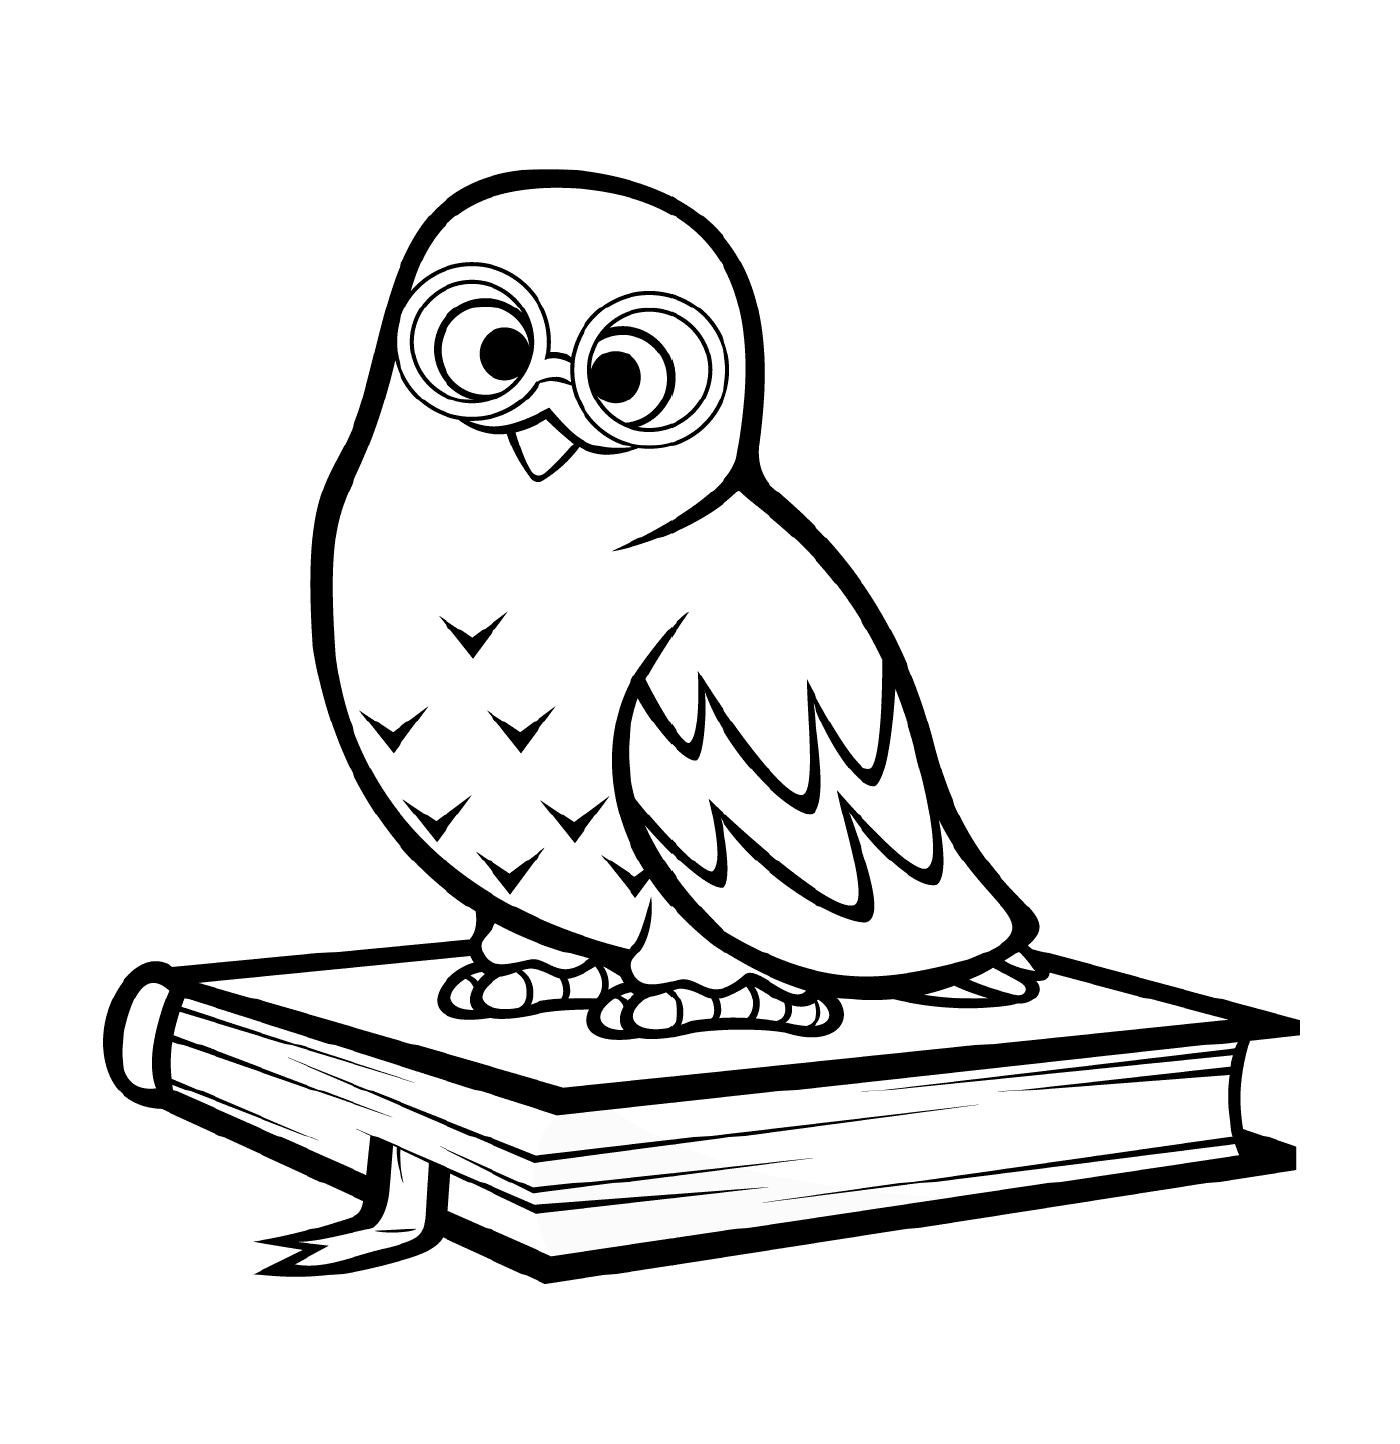  A polar owl sitting on a book 